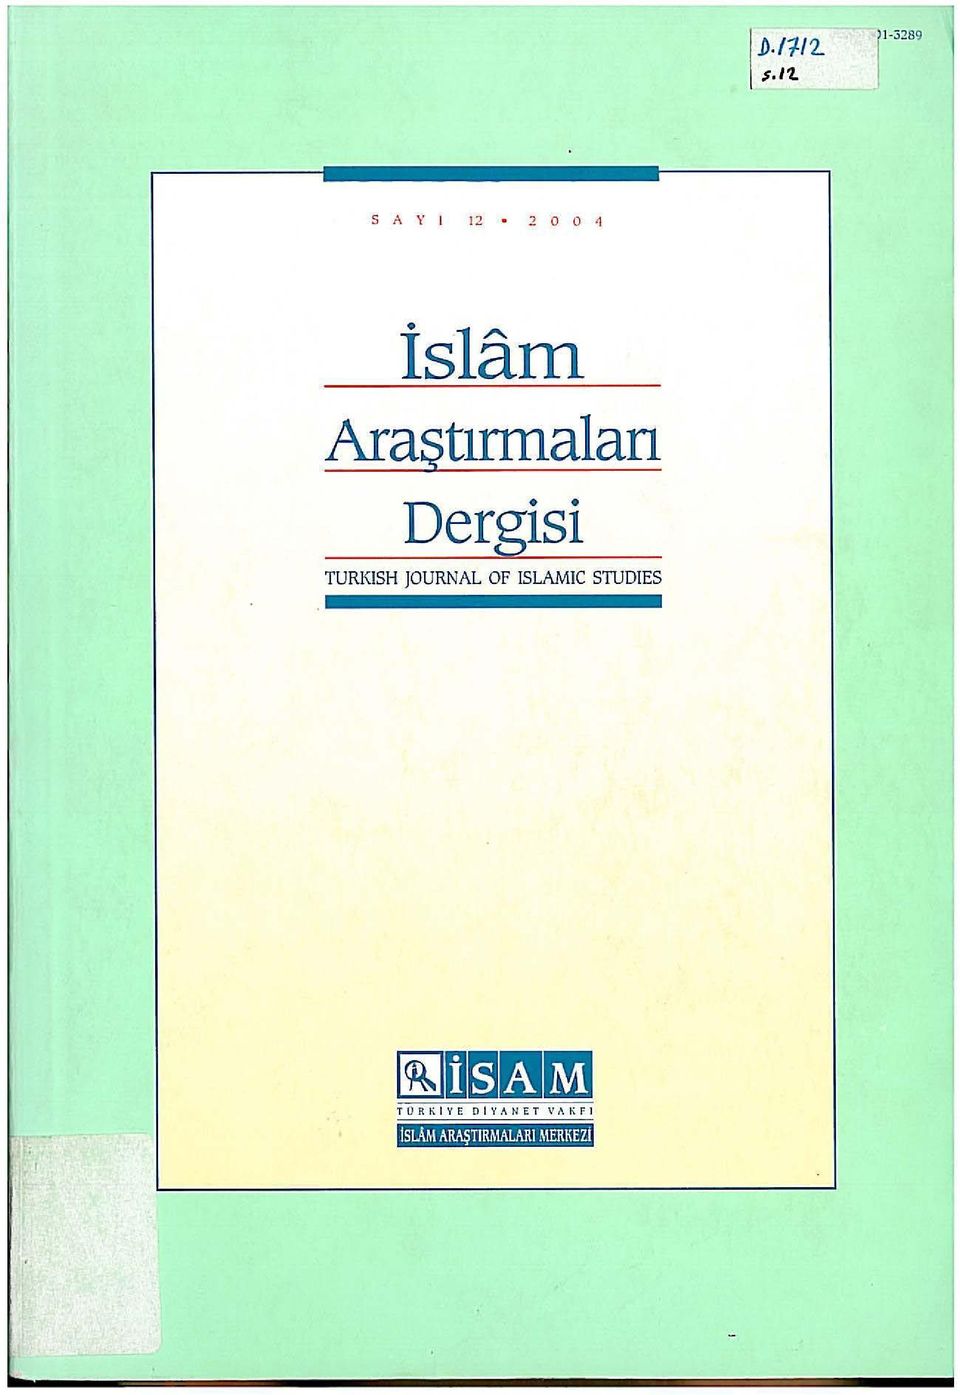 Dergisi TURKISH JOURNAL OF ISLAMIC STUDIES